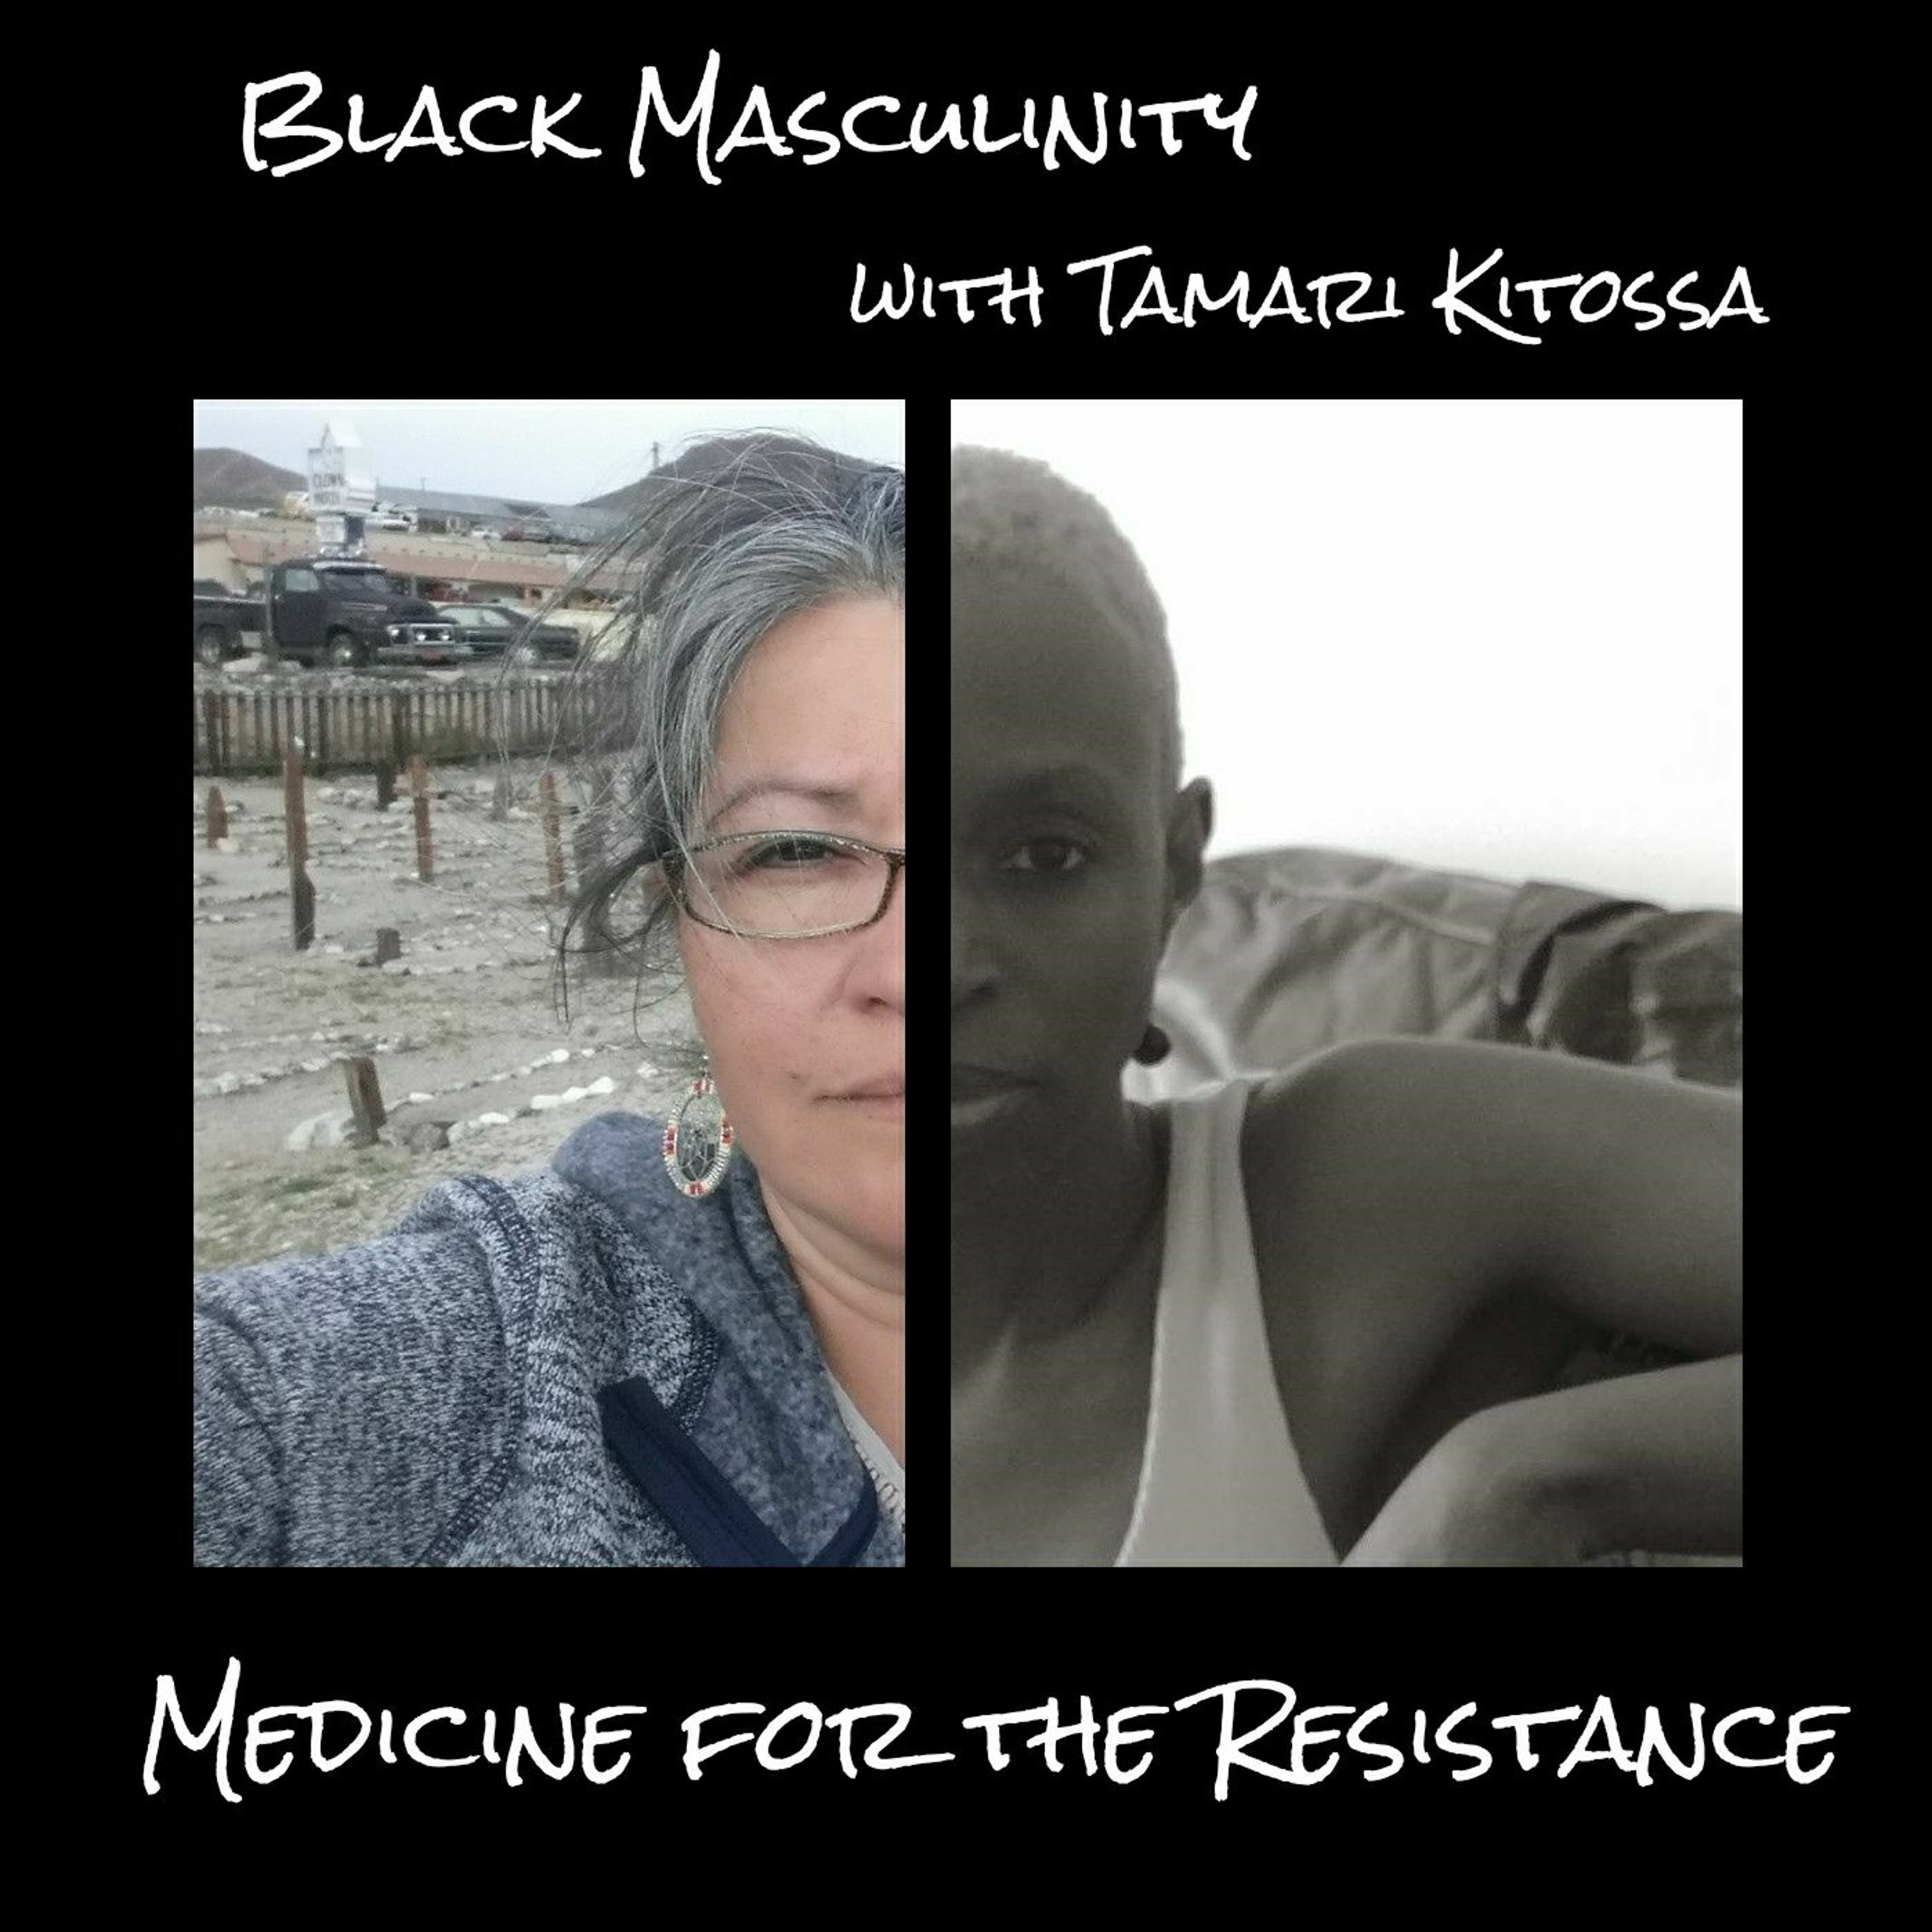 Black Masculinity with Dr. Tamari Kitossa